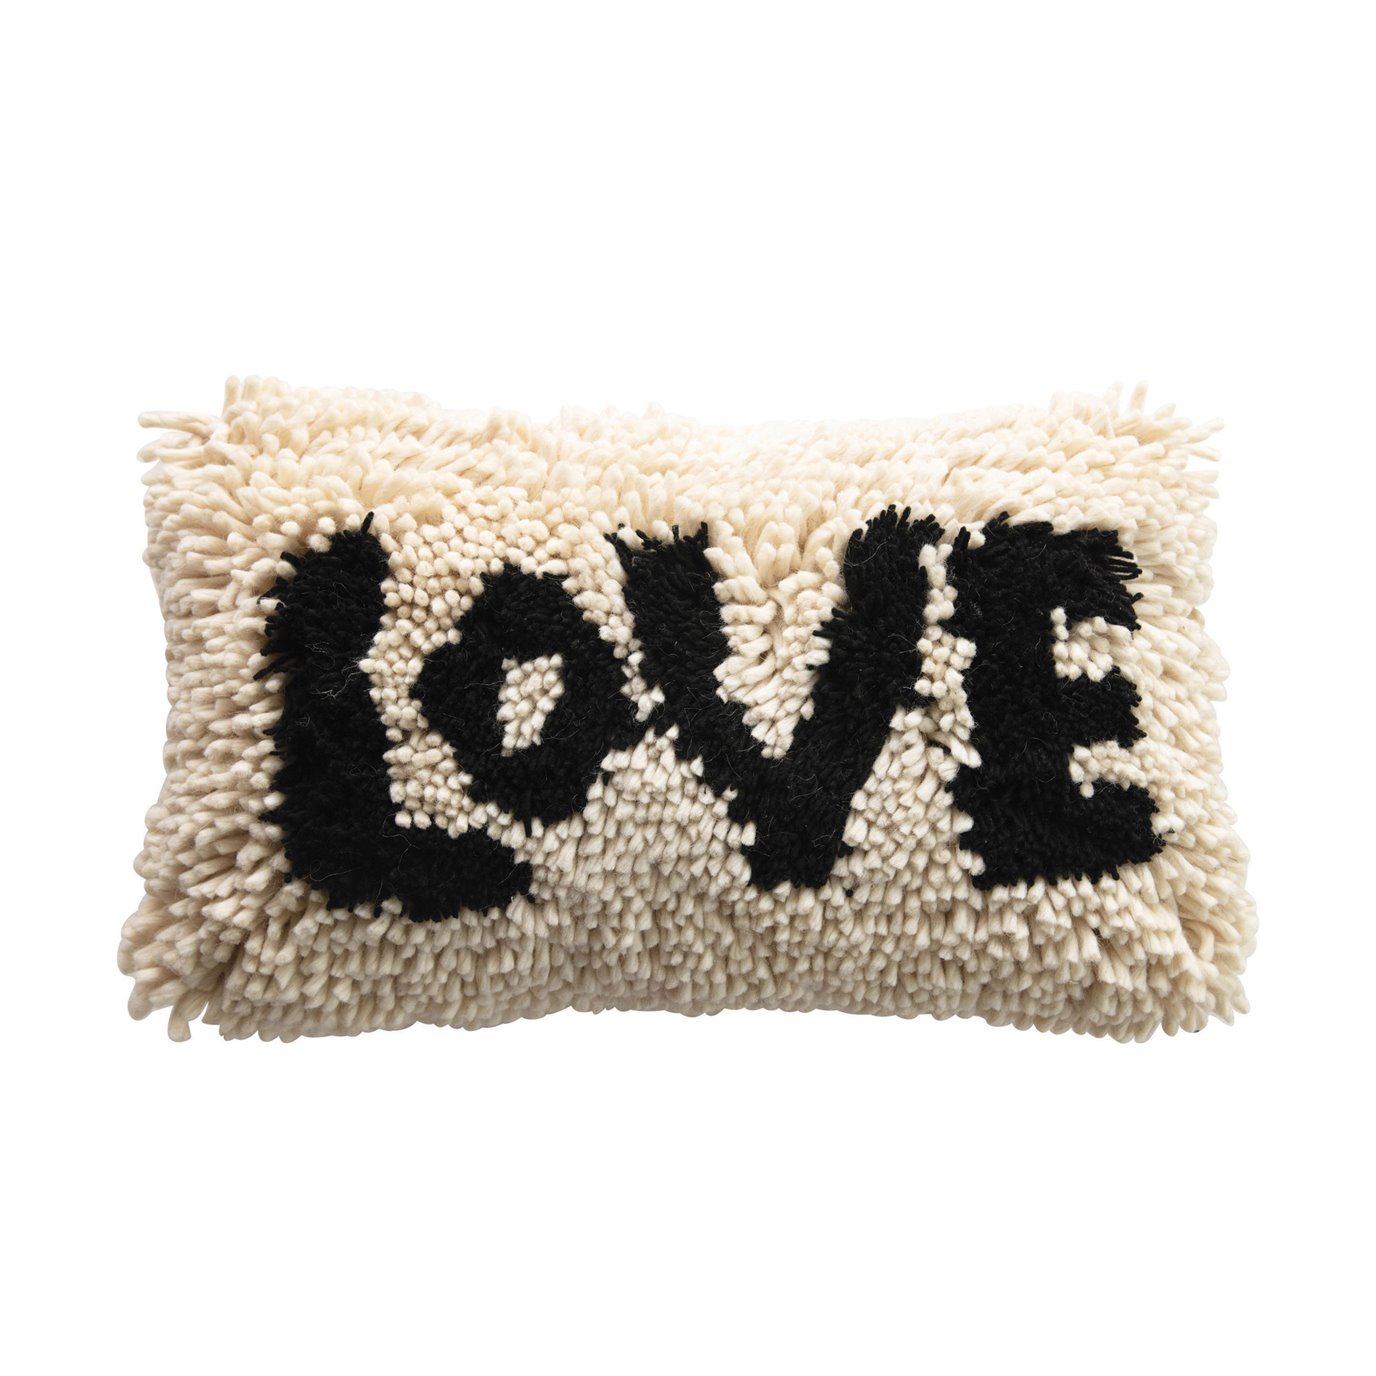 Woven Wool Shag Lumbar Pillow "Love", Black & Cream Color